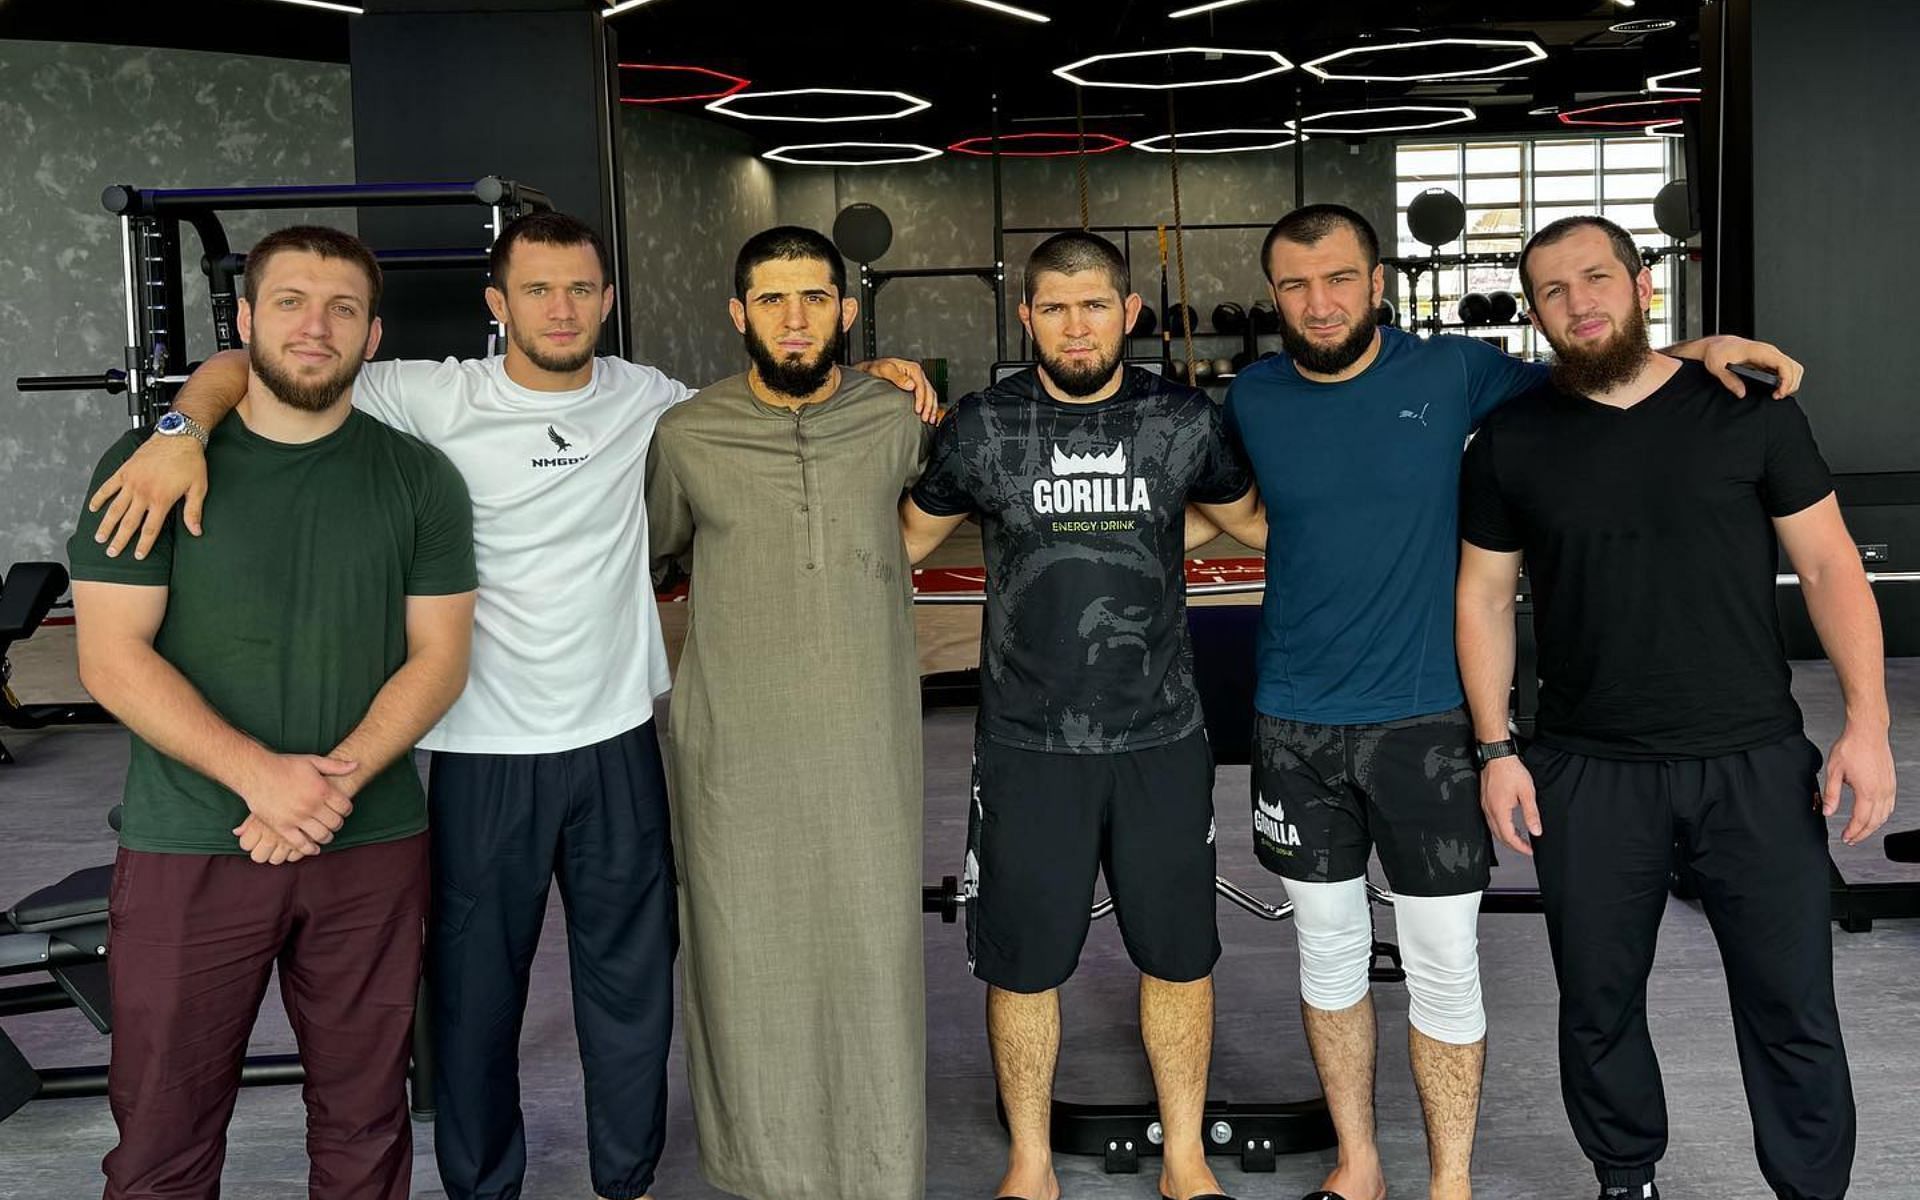 Islam Makhachev and Khabib Nurmagomedov (centre) pose with their teammates [Image Credit: @khabib_nurmagomedov on Instagram]